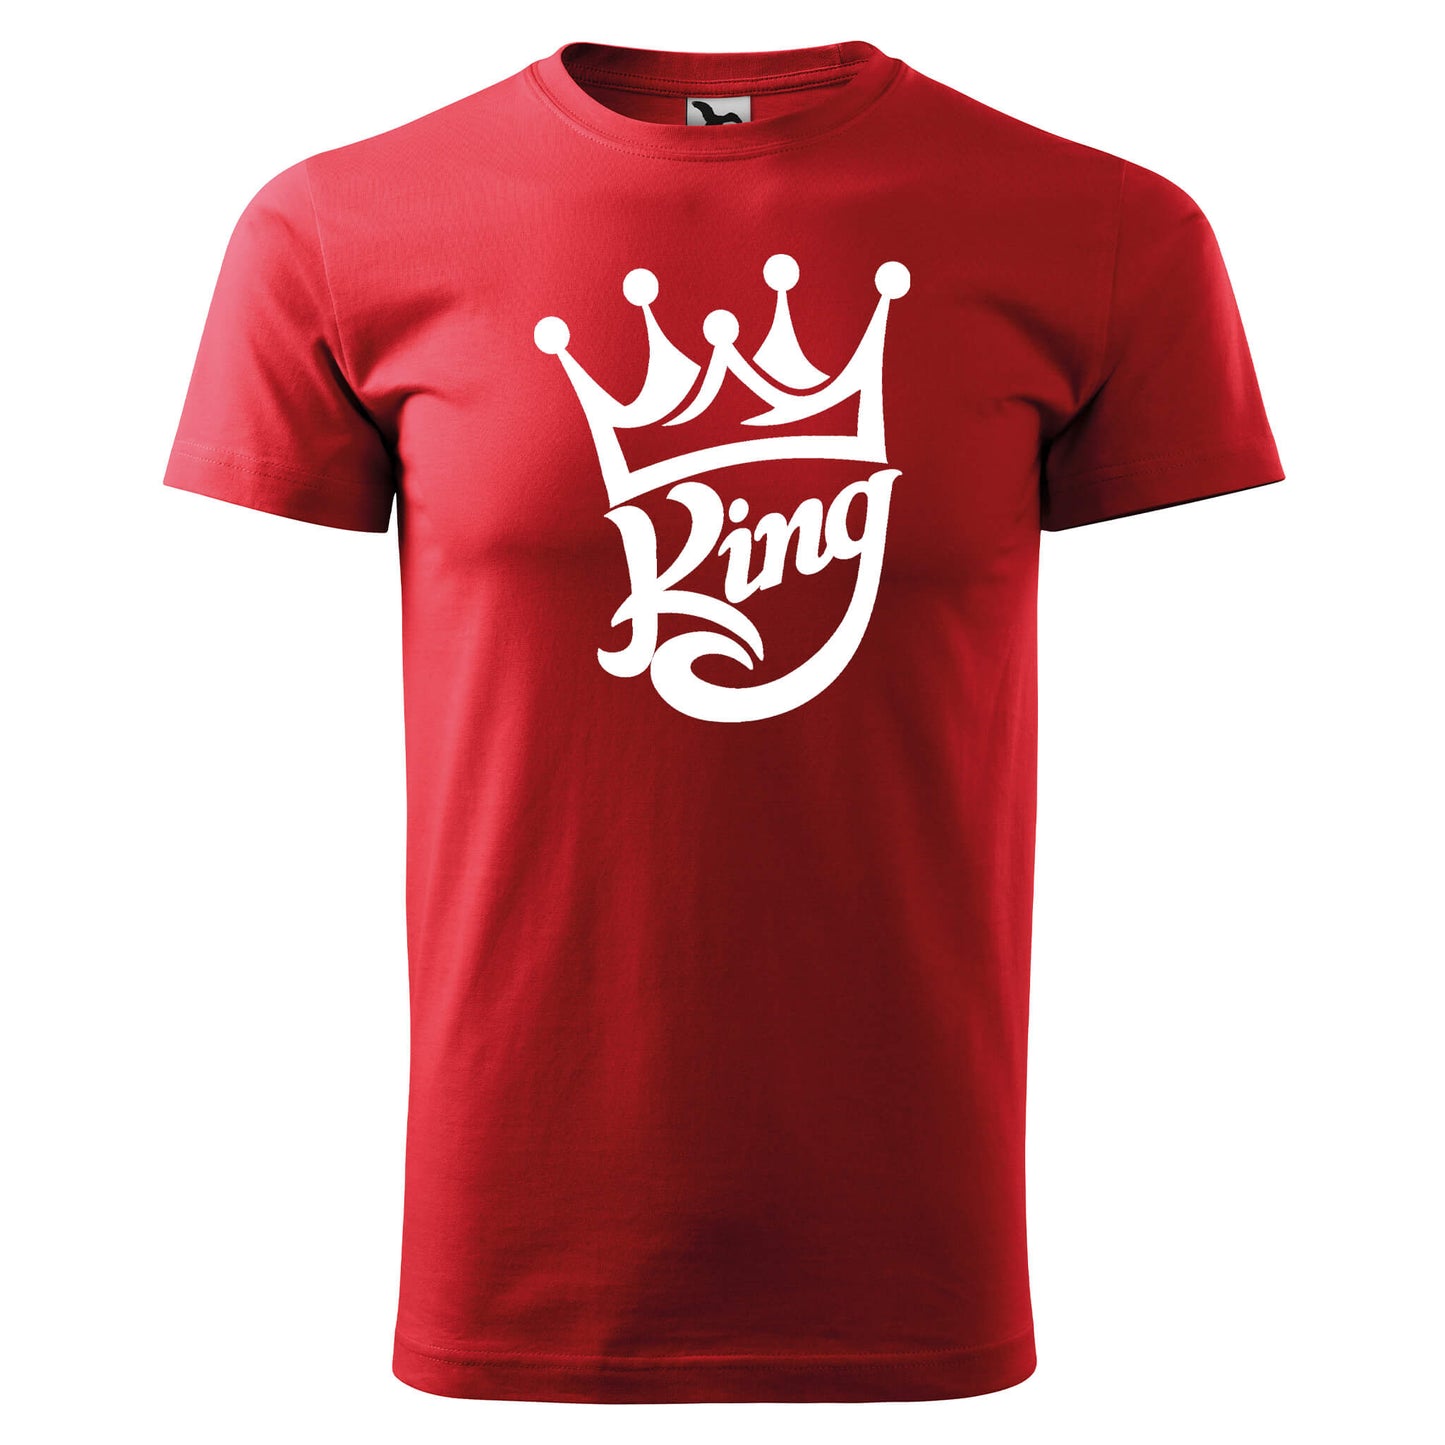 T-shirt - King - rvdesignprint